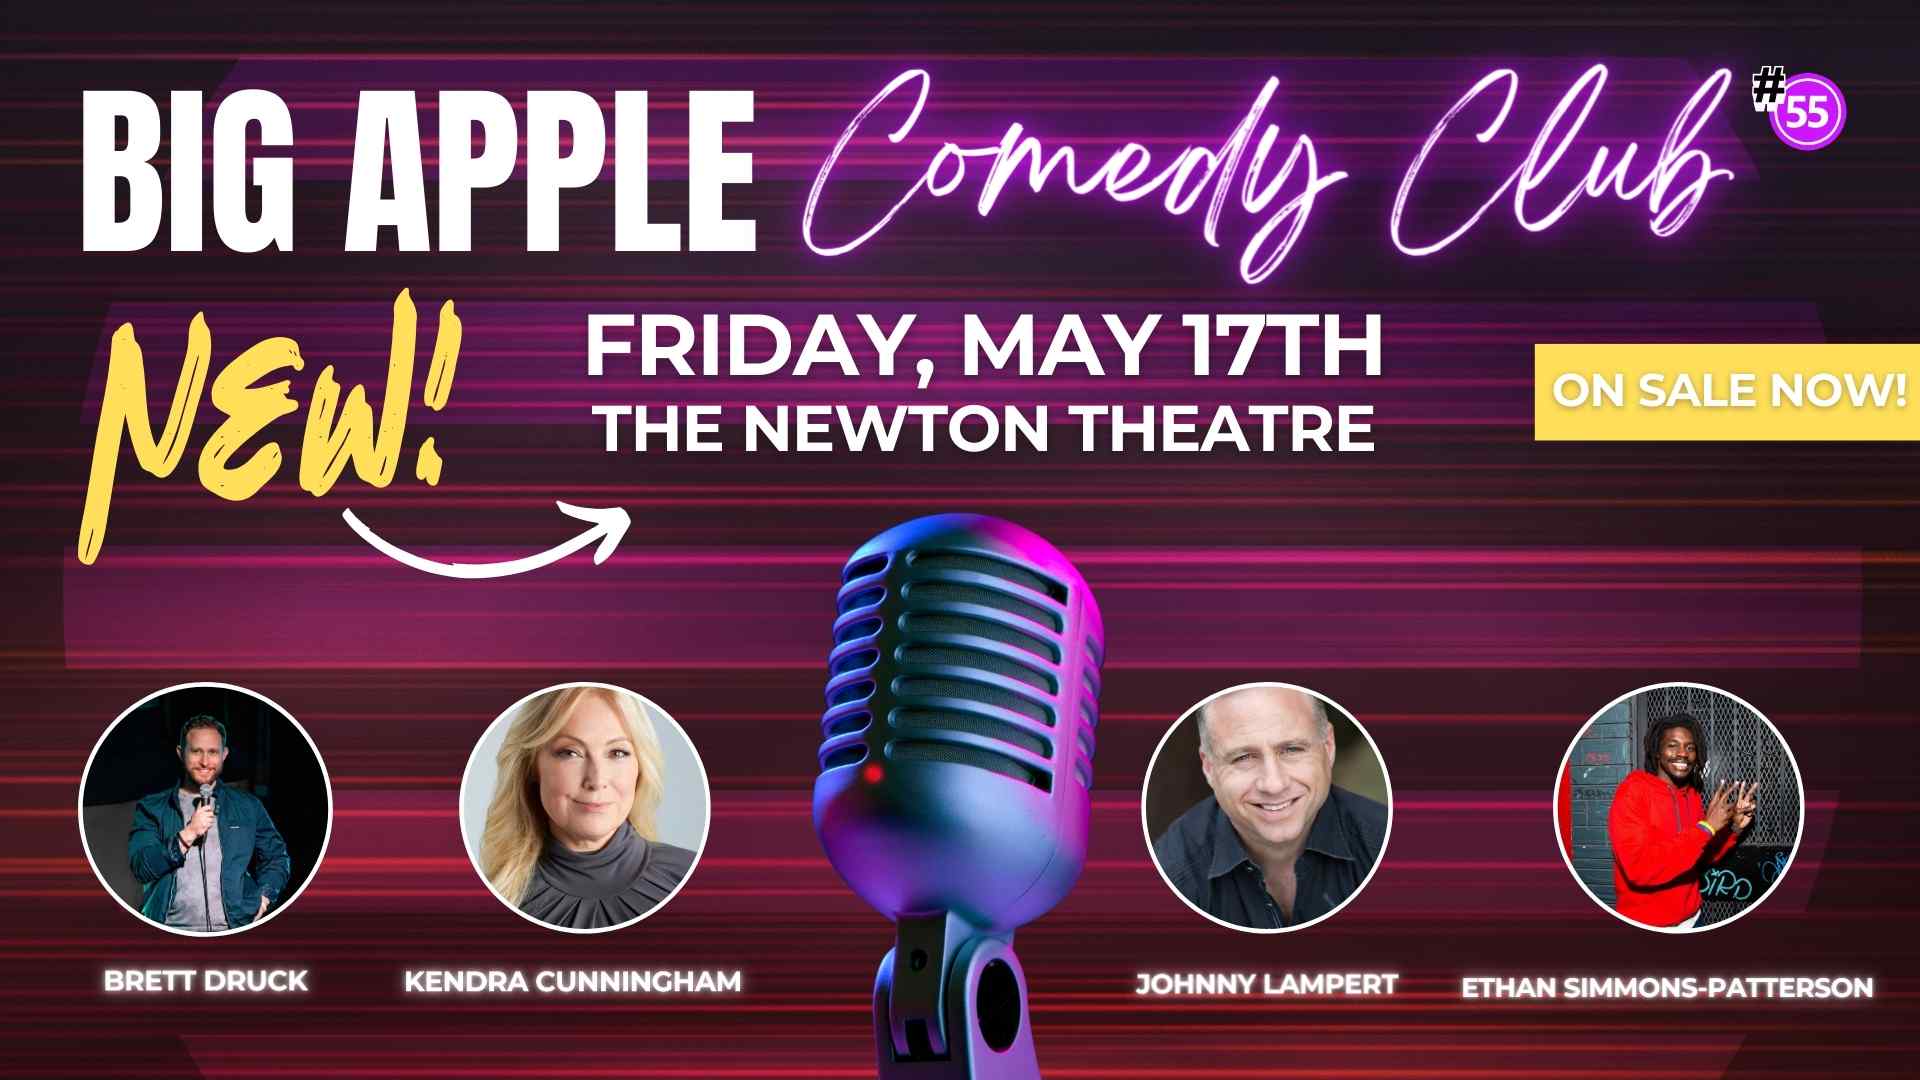 Big Apple Comedy Club #55 at The Newton Theatre